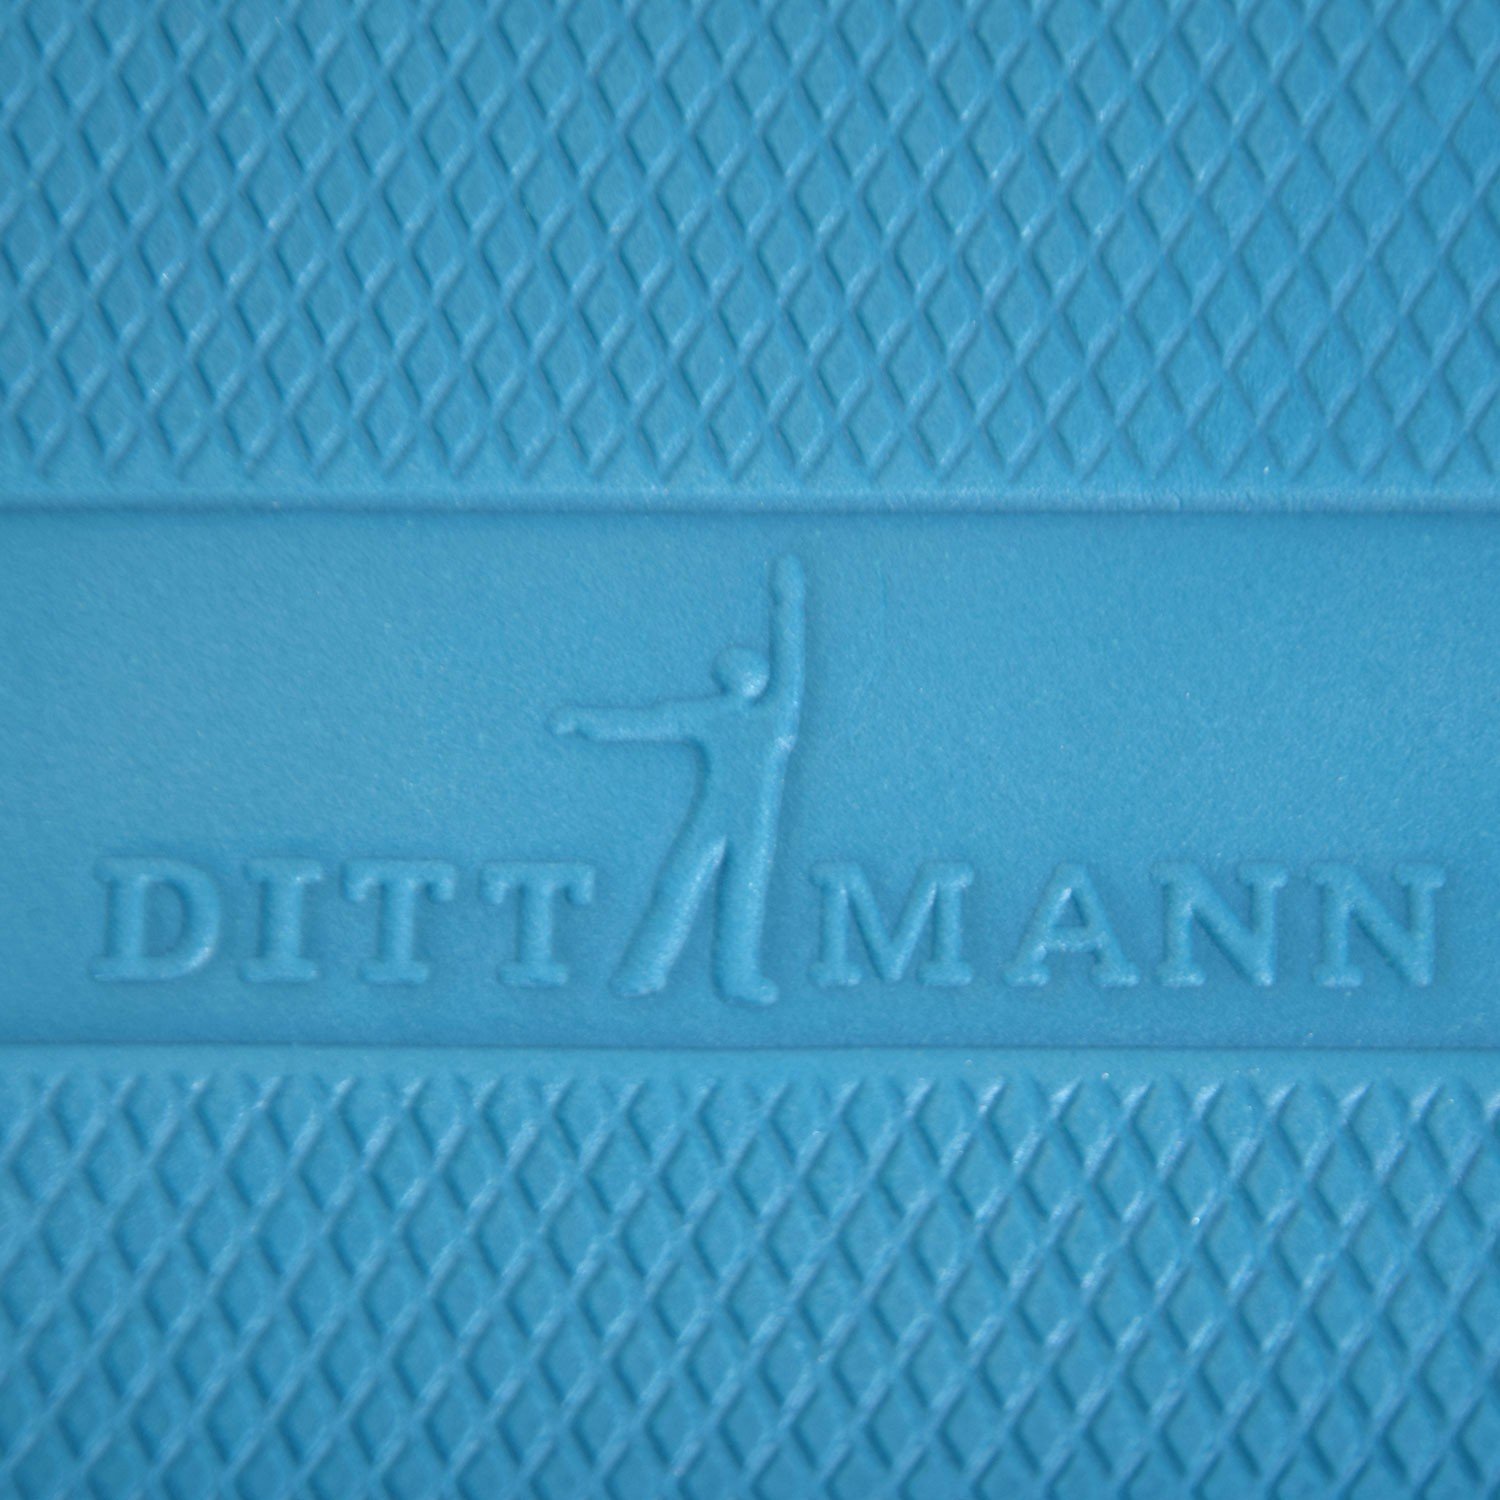 Balance pad Dittmann - Blauw